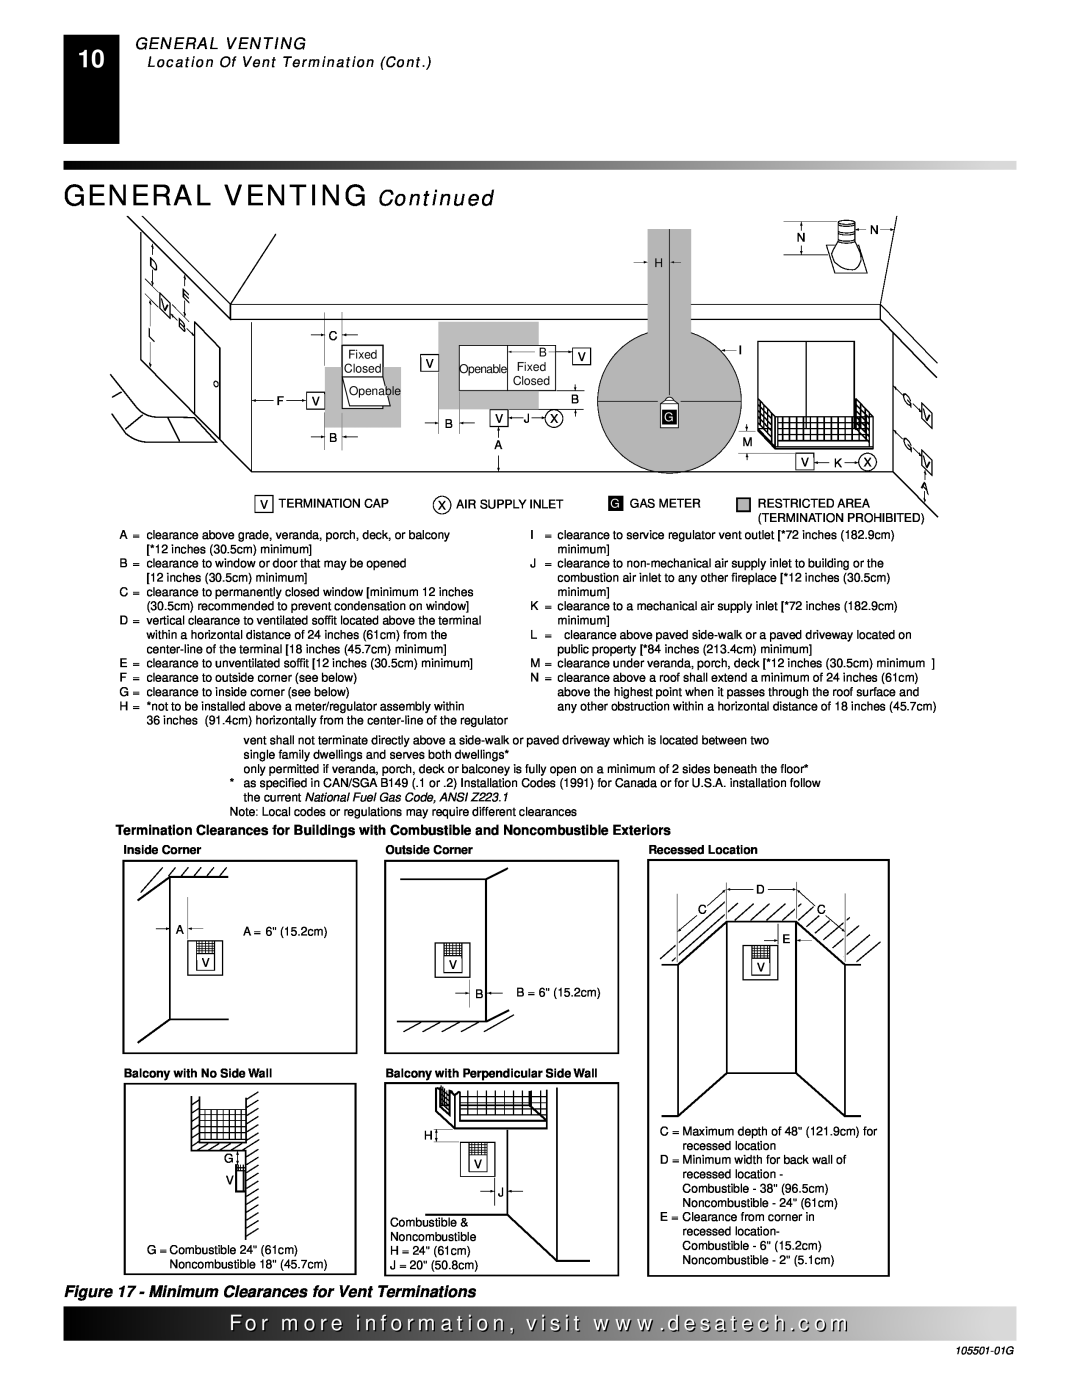 Desa Tech CDVBNC D E B L, V G V A, For..com, General Venting, Minimum Clearances for Vent Terminations, Inside Corner 